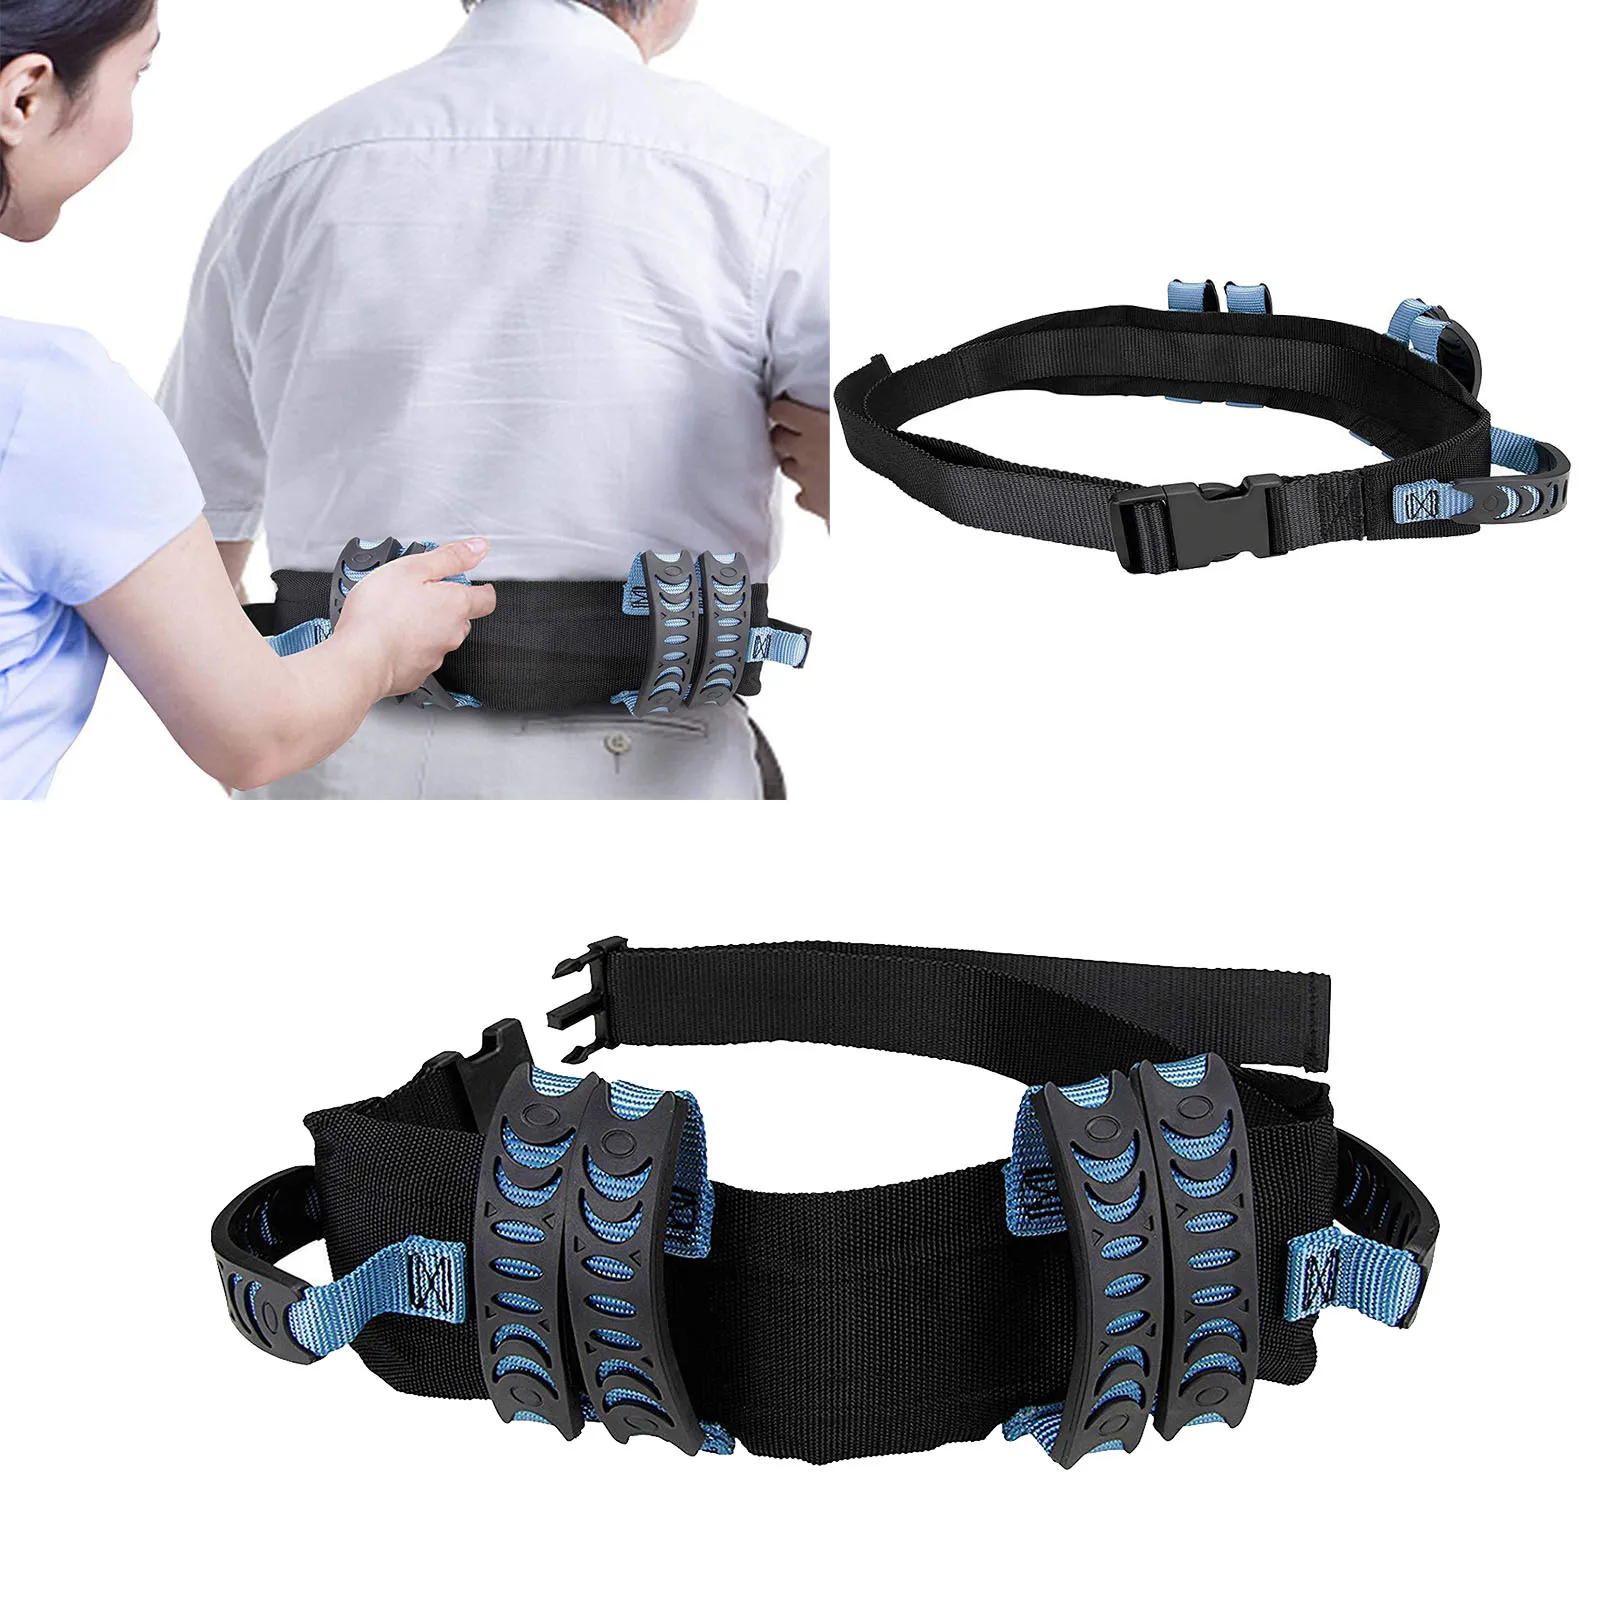 

Safety Transfer Gait Belt Quick Release Buckle for Patient Care Elderly Blue Walking Nursing Assist Straps Safety Gait Handles